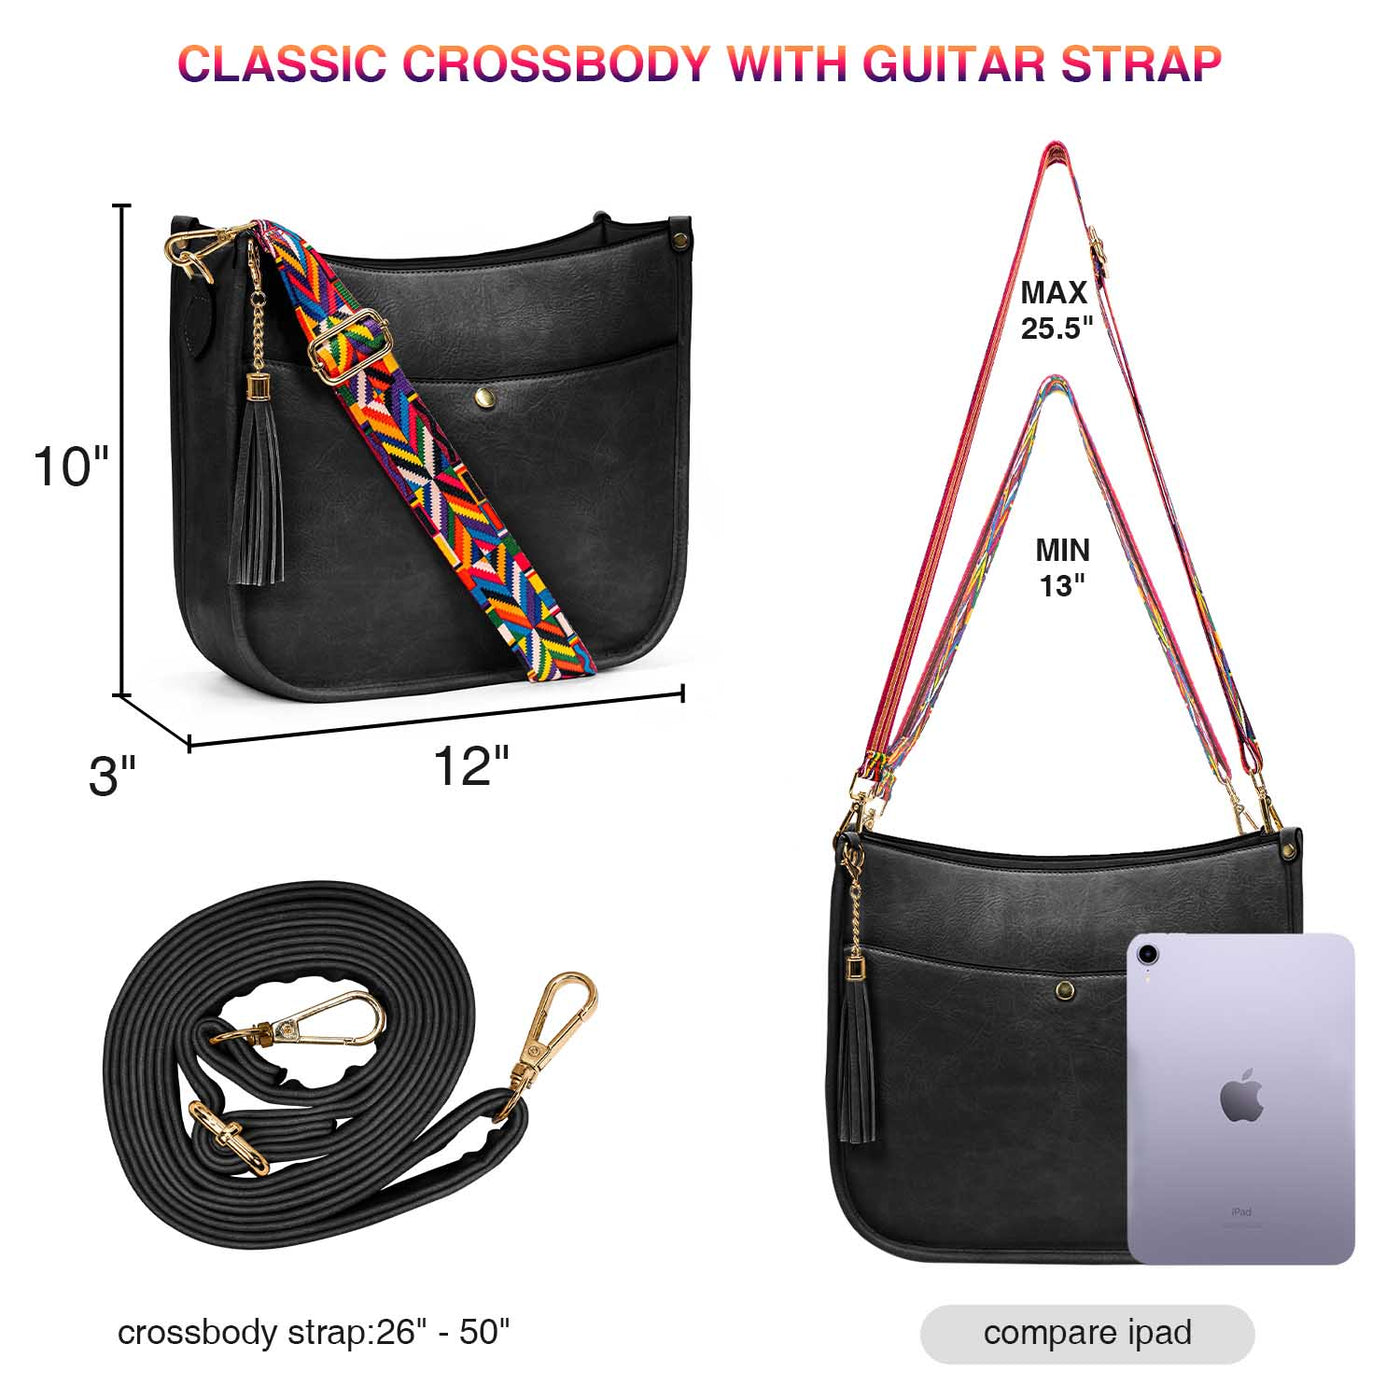 VIEOAGEO Crossbody Bags for Women PU Leather Shoulder Bag Purse with Tassel  Snapshot Camera Bag Wide Guitar Strap Handbags